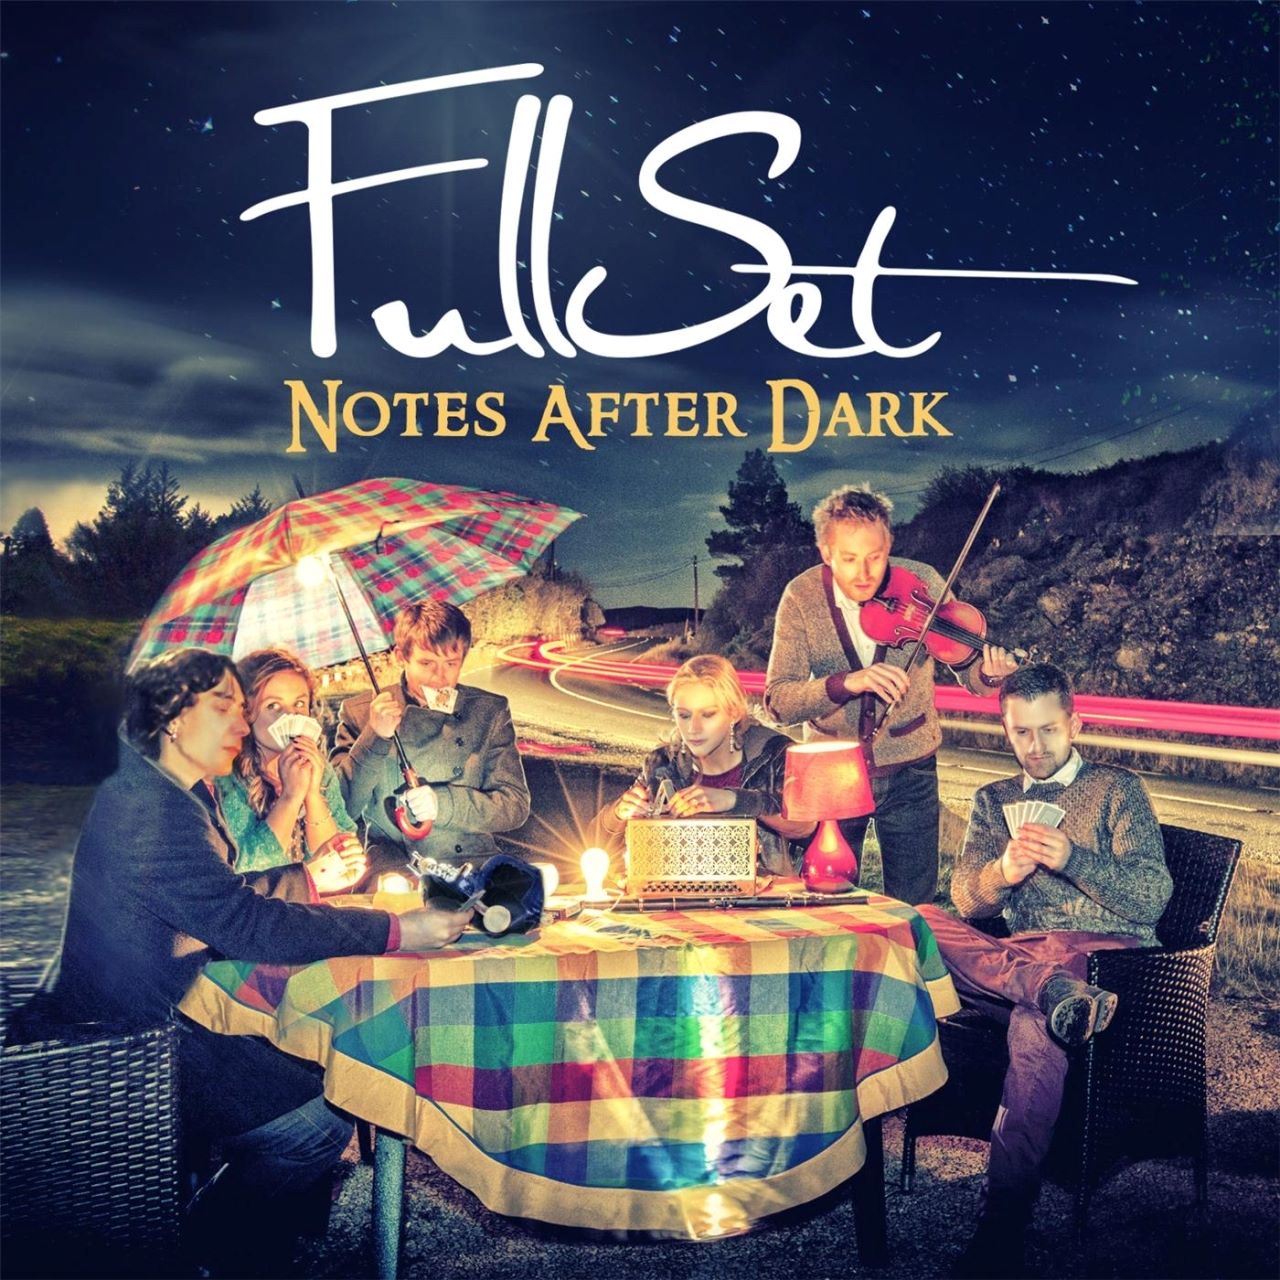 Fullset - Notes After Dark cover album